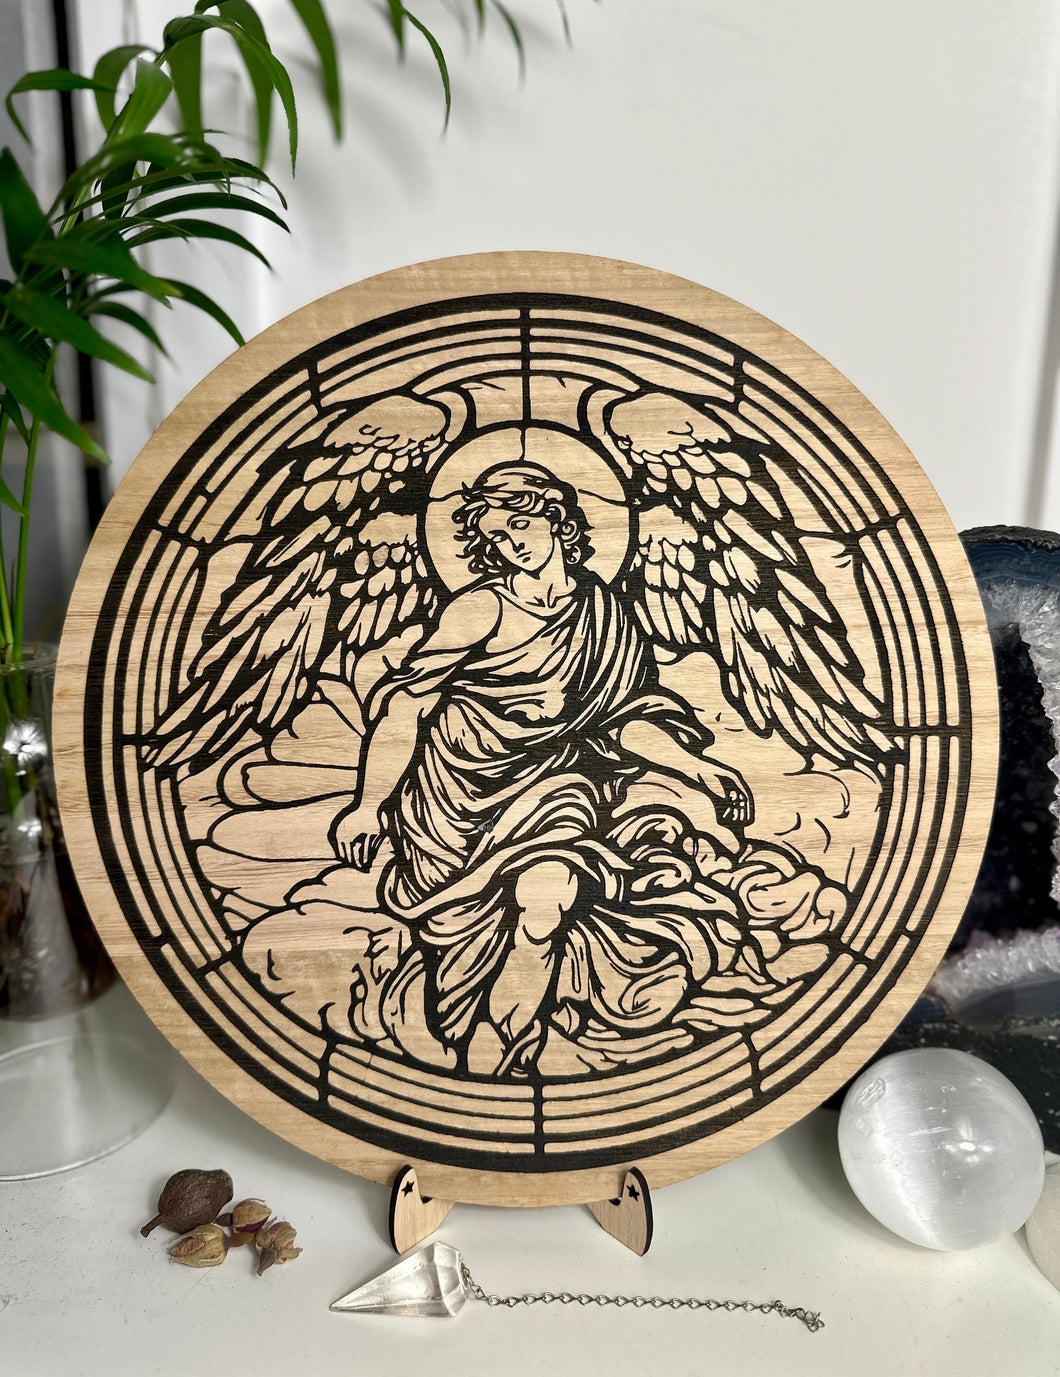 Archangel Michael engraving - Protector + spiritual warrior